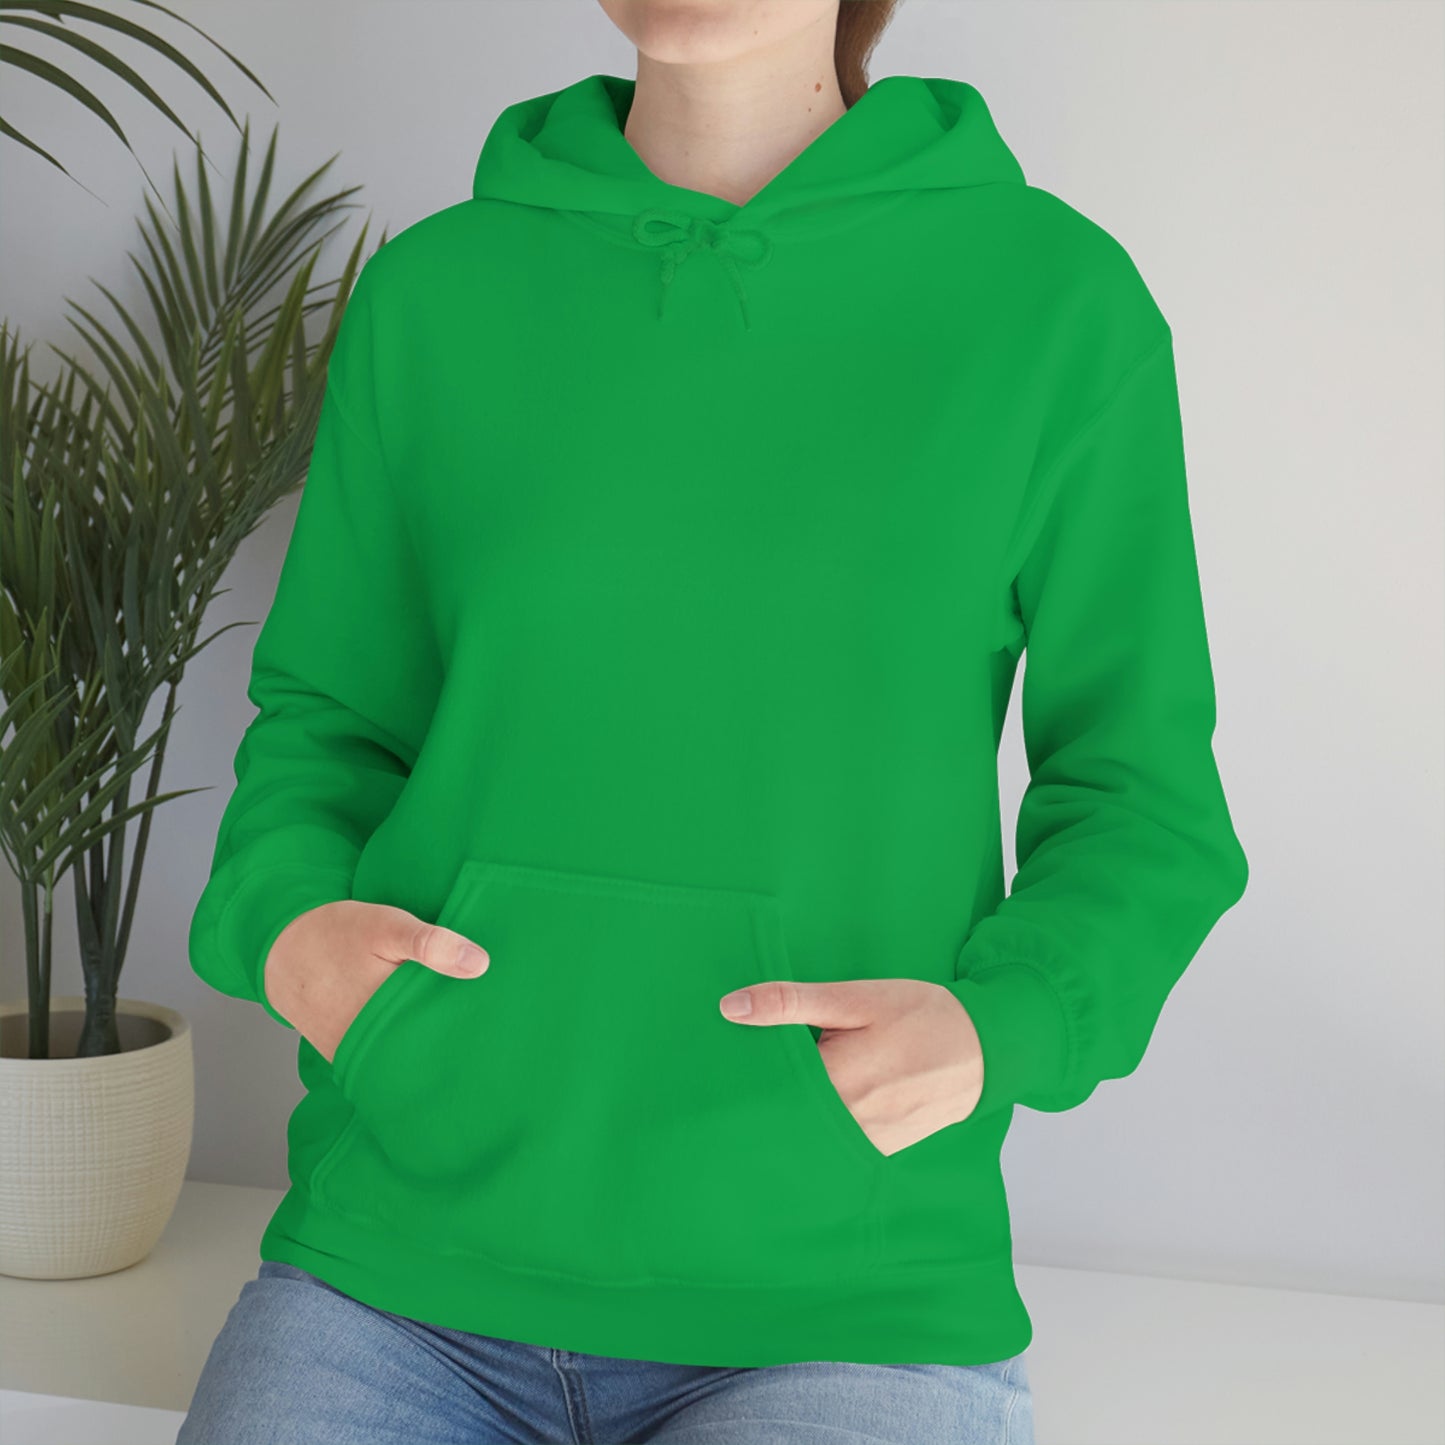 Hardcore Arachnids Unisex Heavy Blend™ Hooded Sweatshirt